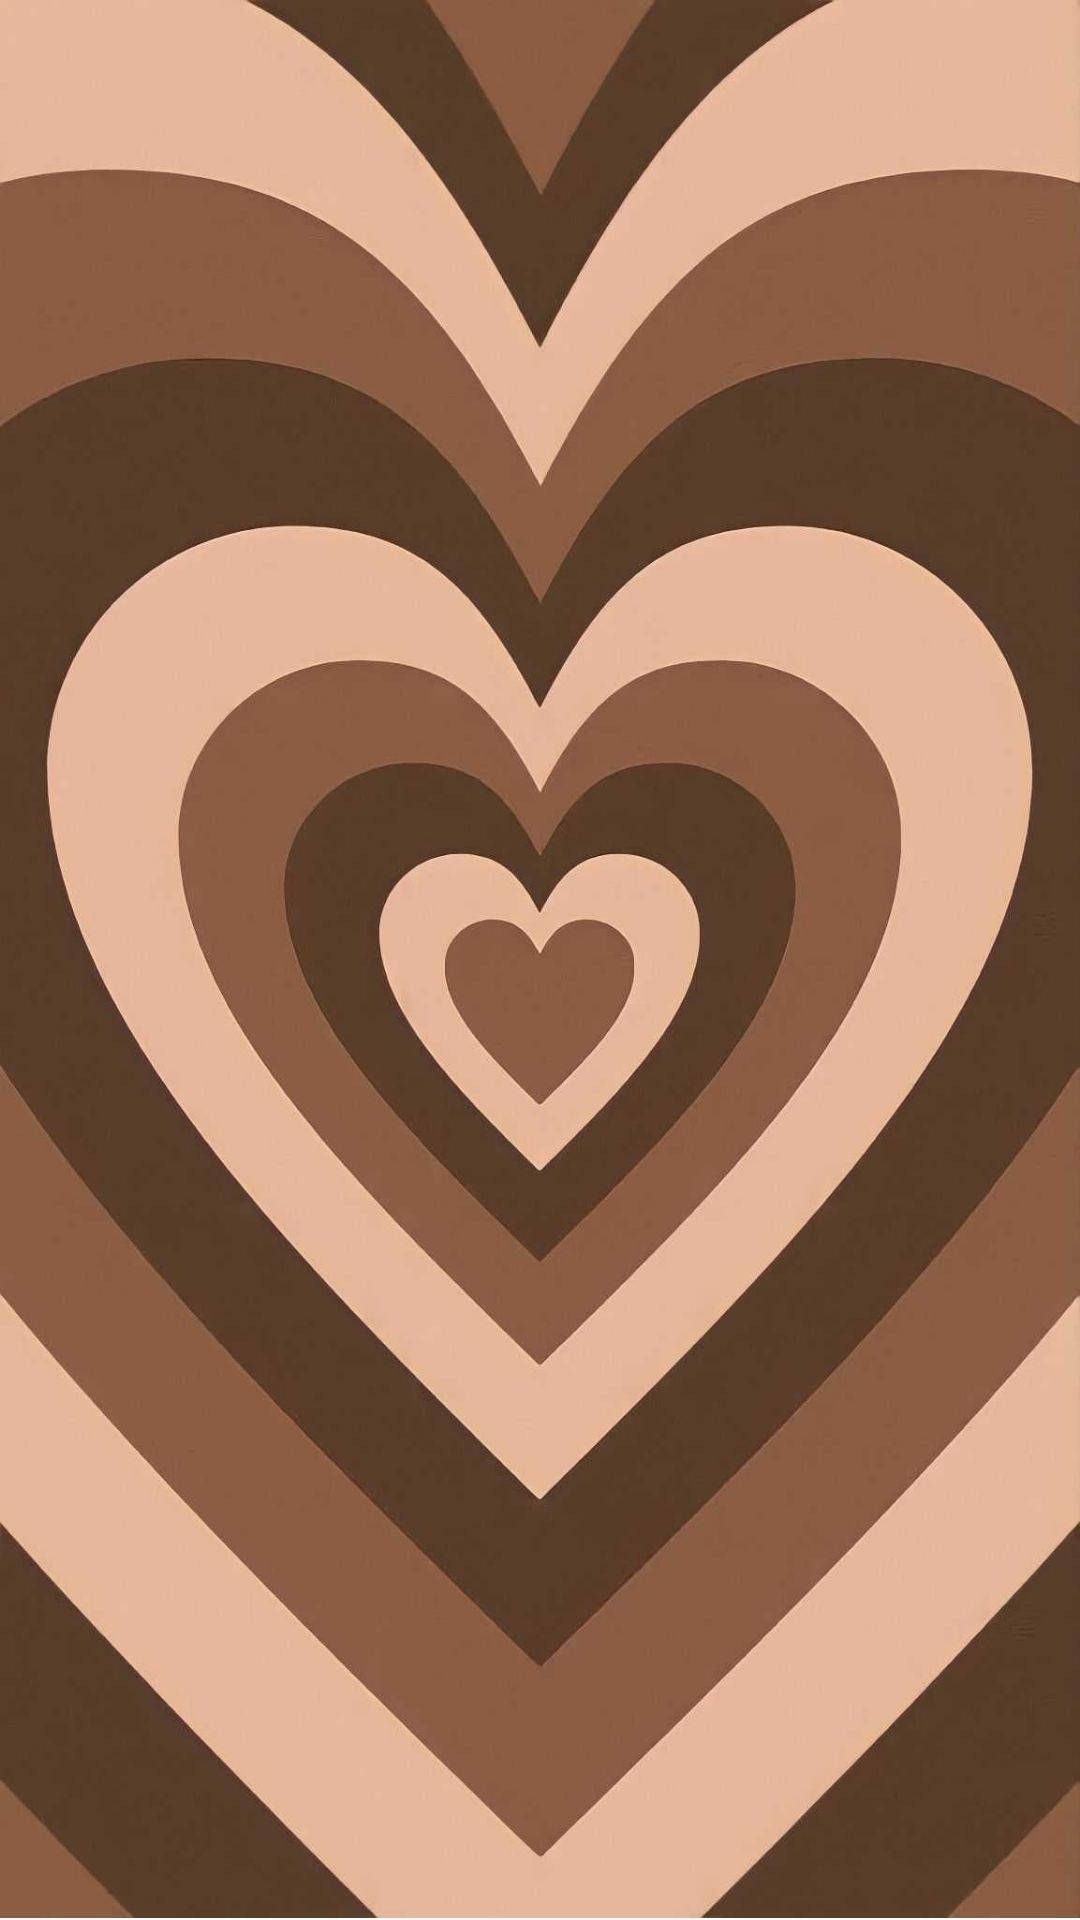  Love Hintergrundbild 1080x1920. Download Love Aesthetic Brown Hearts Wallpaper